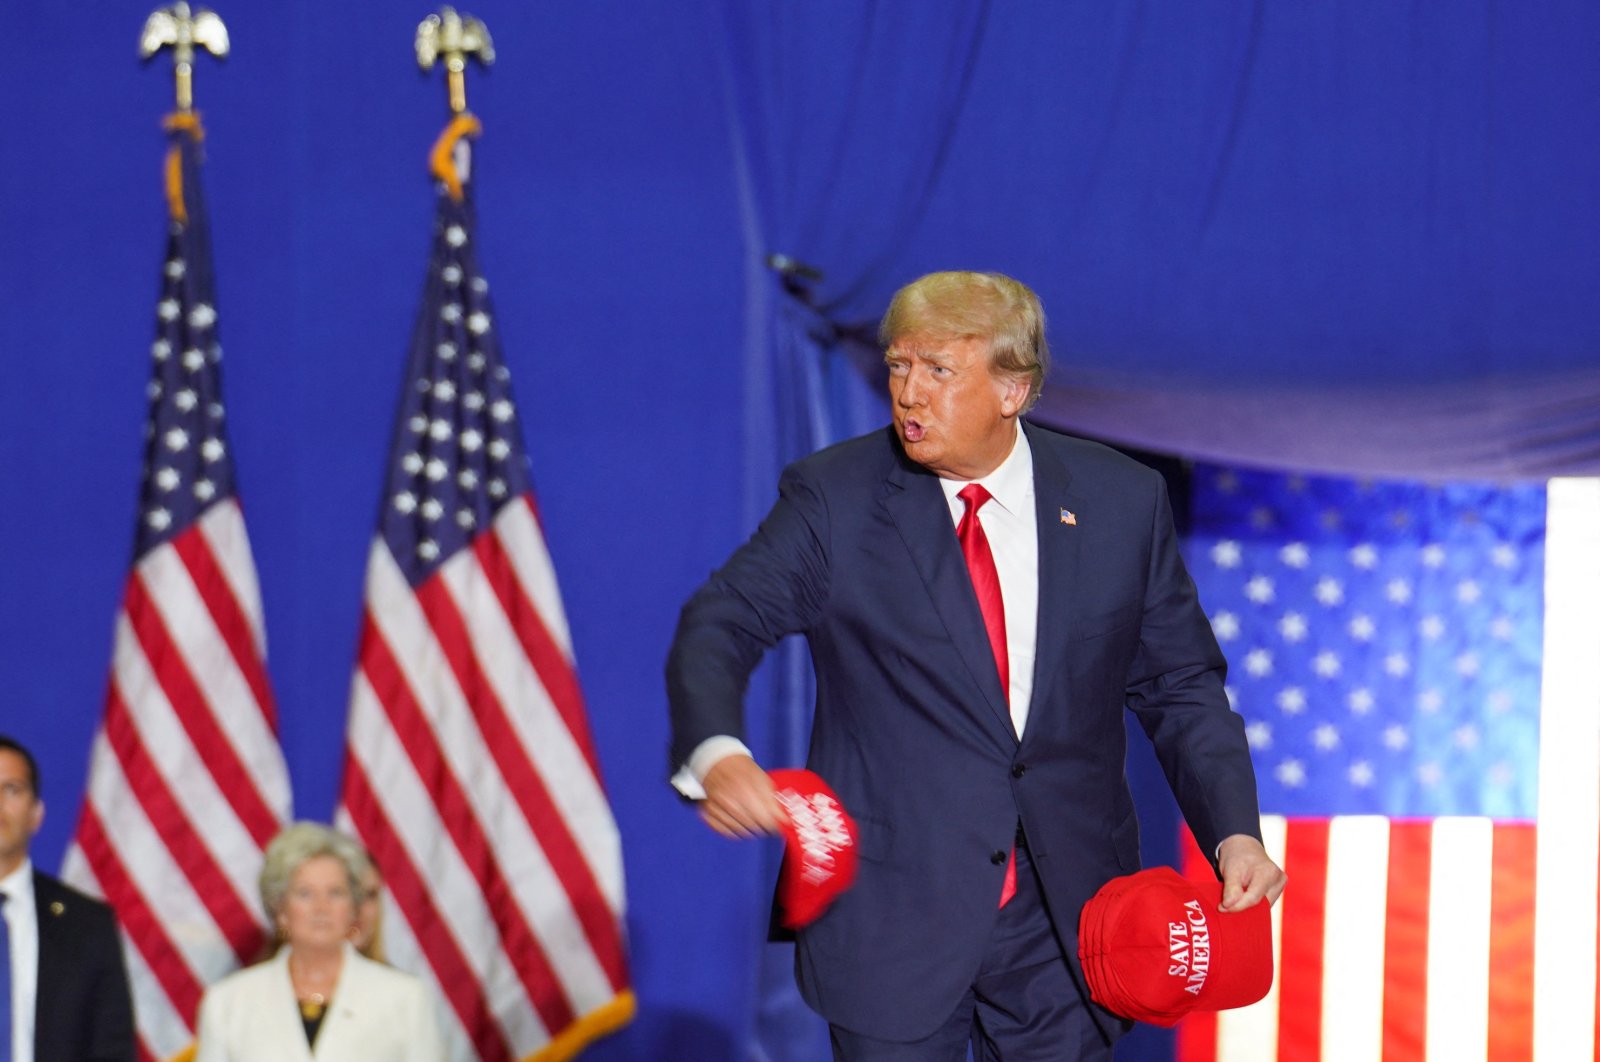 Former U.S. President Donald Trump throws a "Save America" cap as he attends a rally in Warren, Michigan, U.S., Oct. 1, 2022. (Reuters Photo)